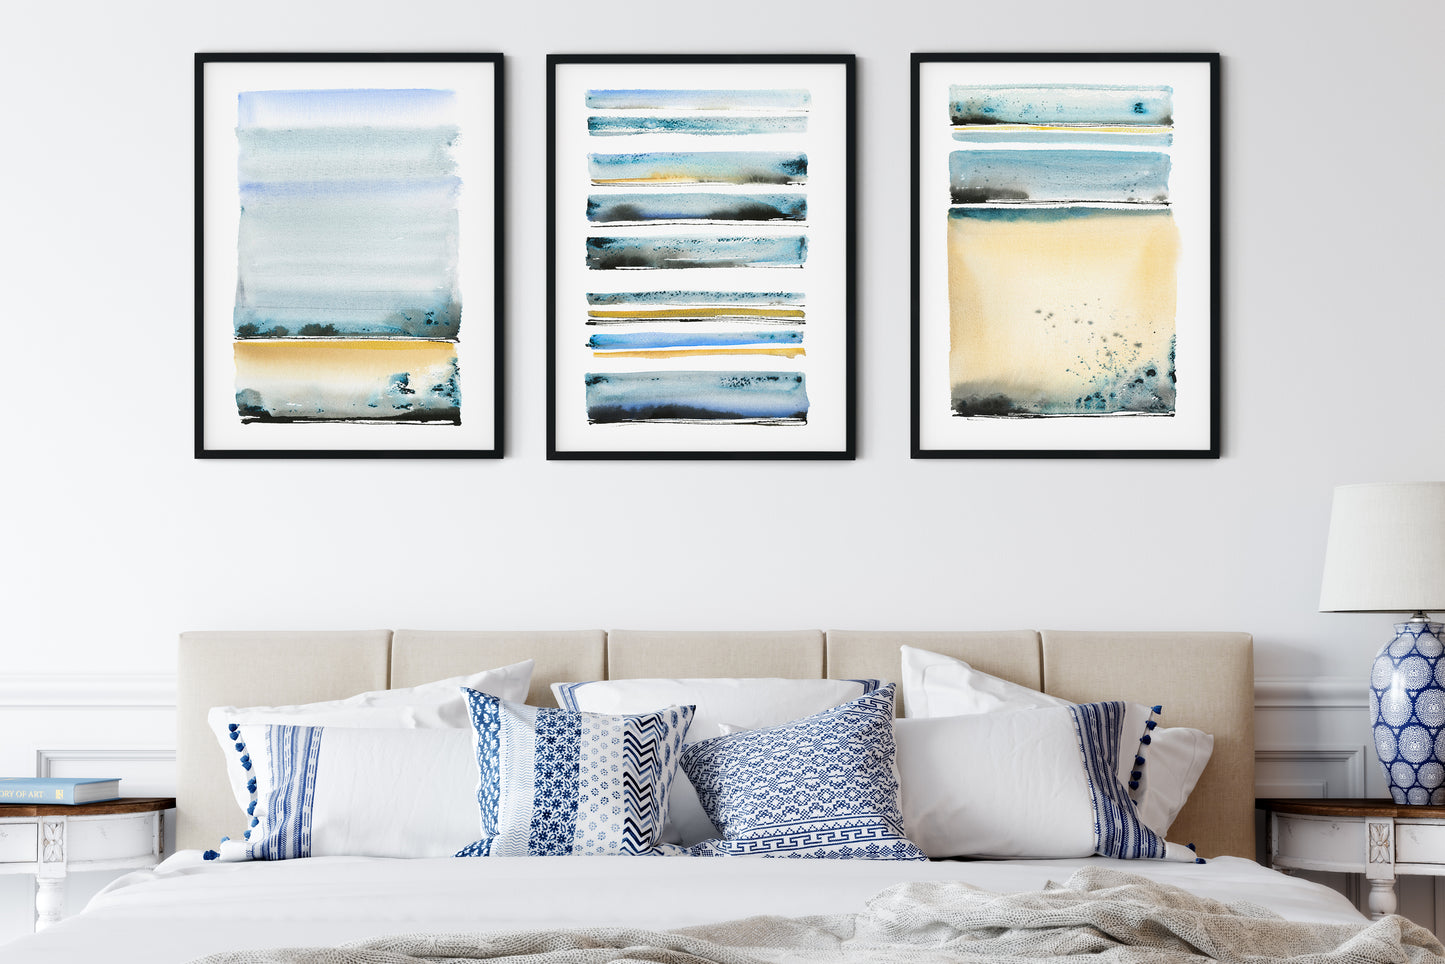 Coastal Vibes Set of 3 Prints - Abstract Beach Art, Ocean Decor, Modern Minimalist Wall Hangings